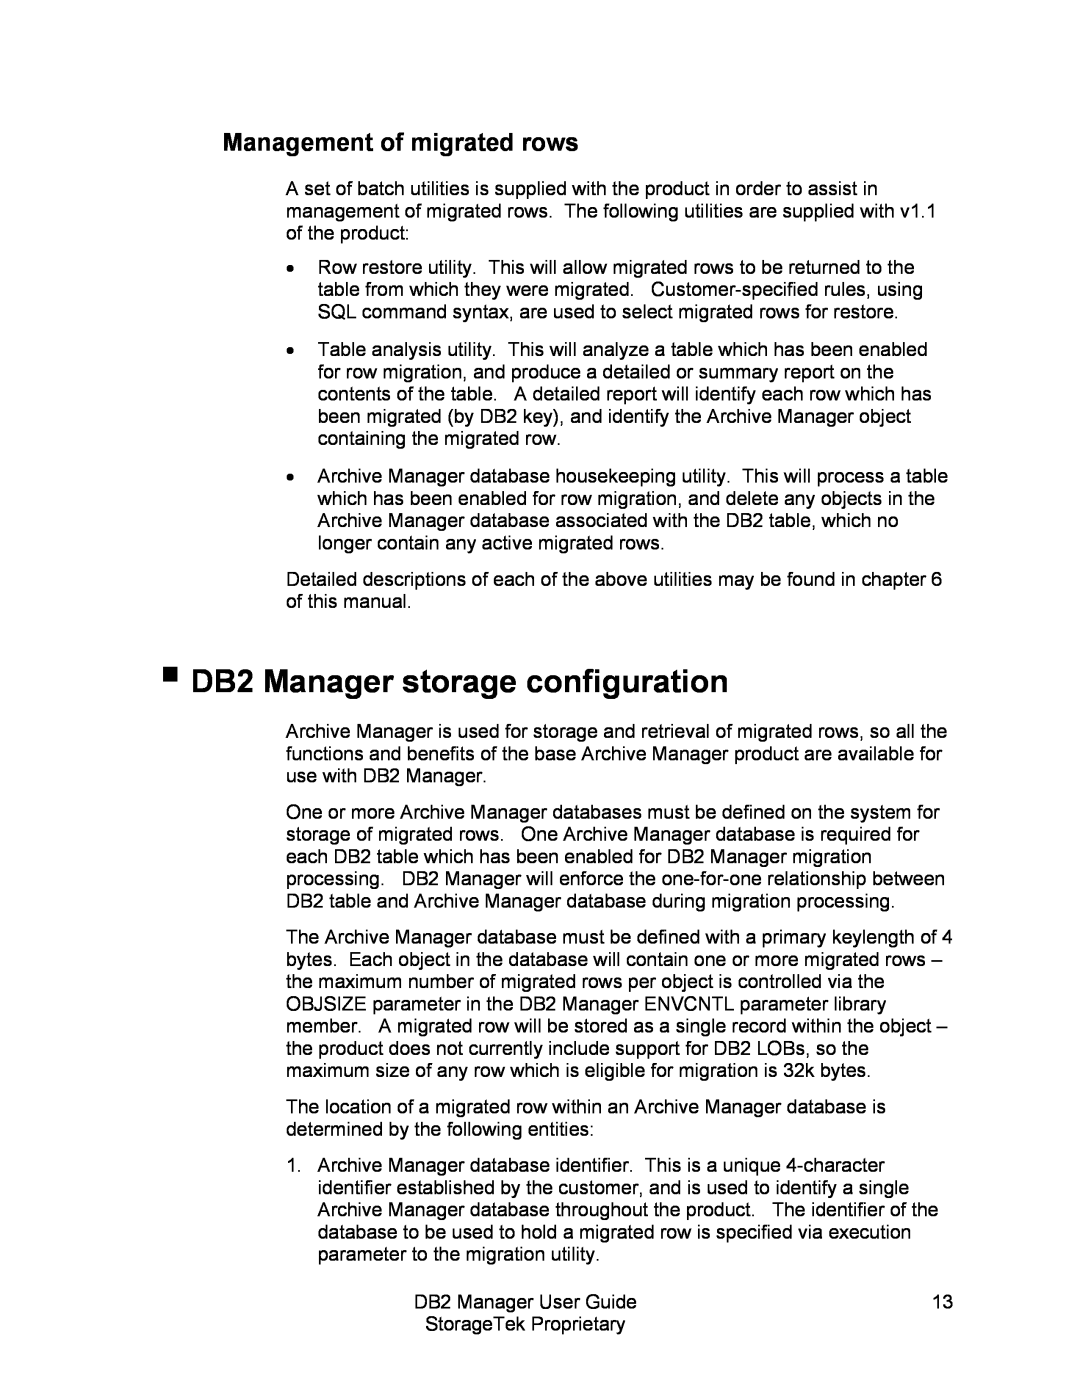 StorageTek 312564001 manual DB2 Manager storage configuration, Management of migrated rows 